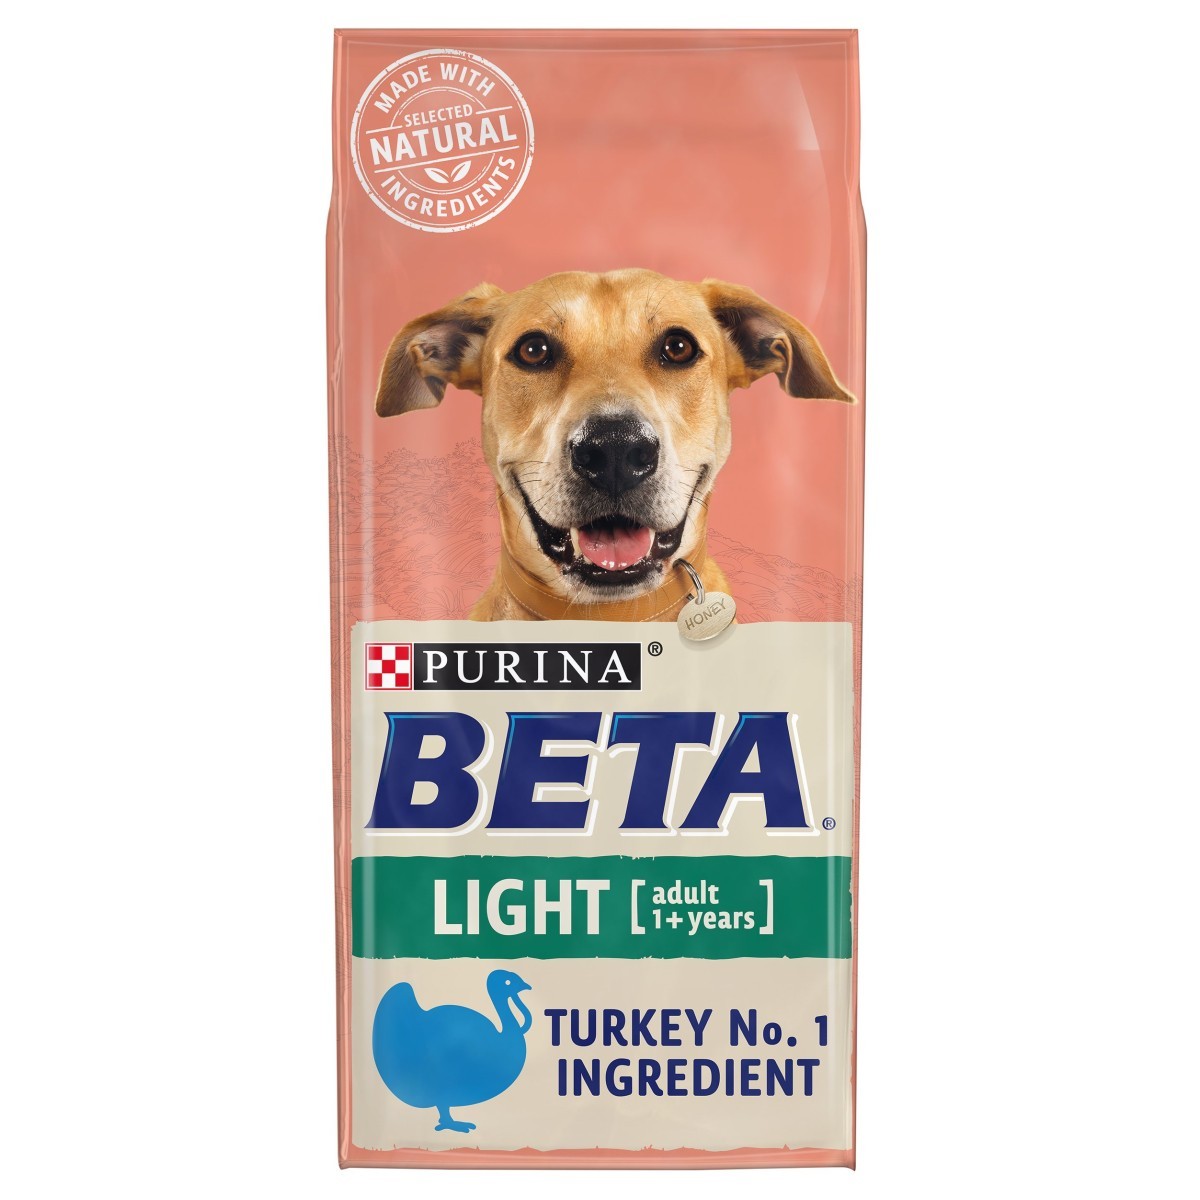 beta active dog food